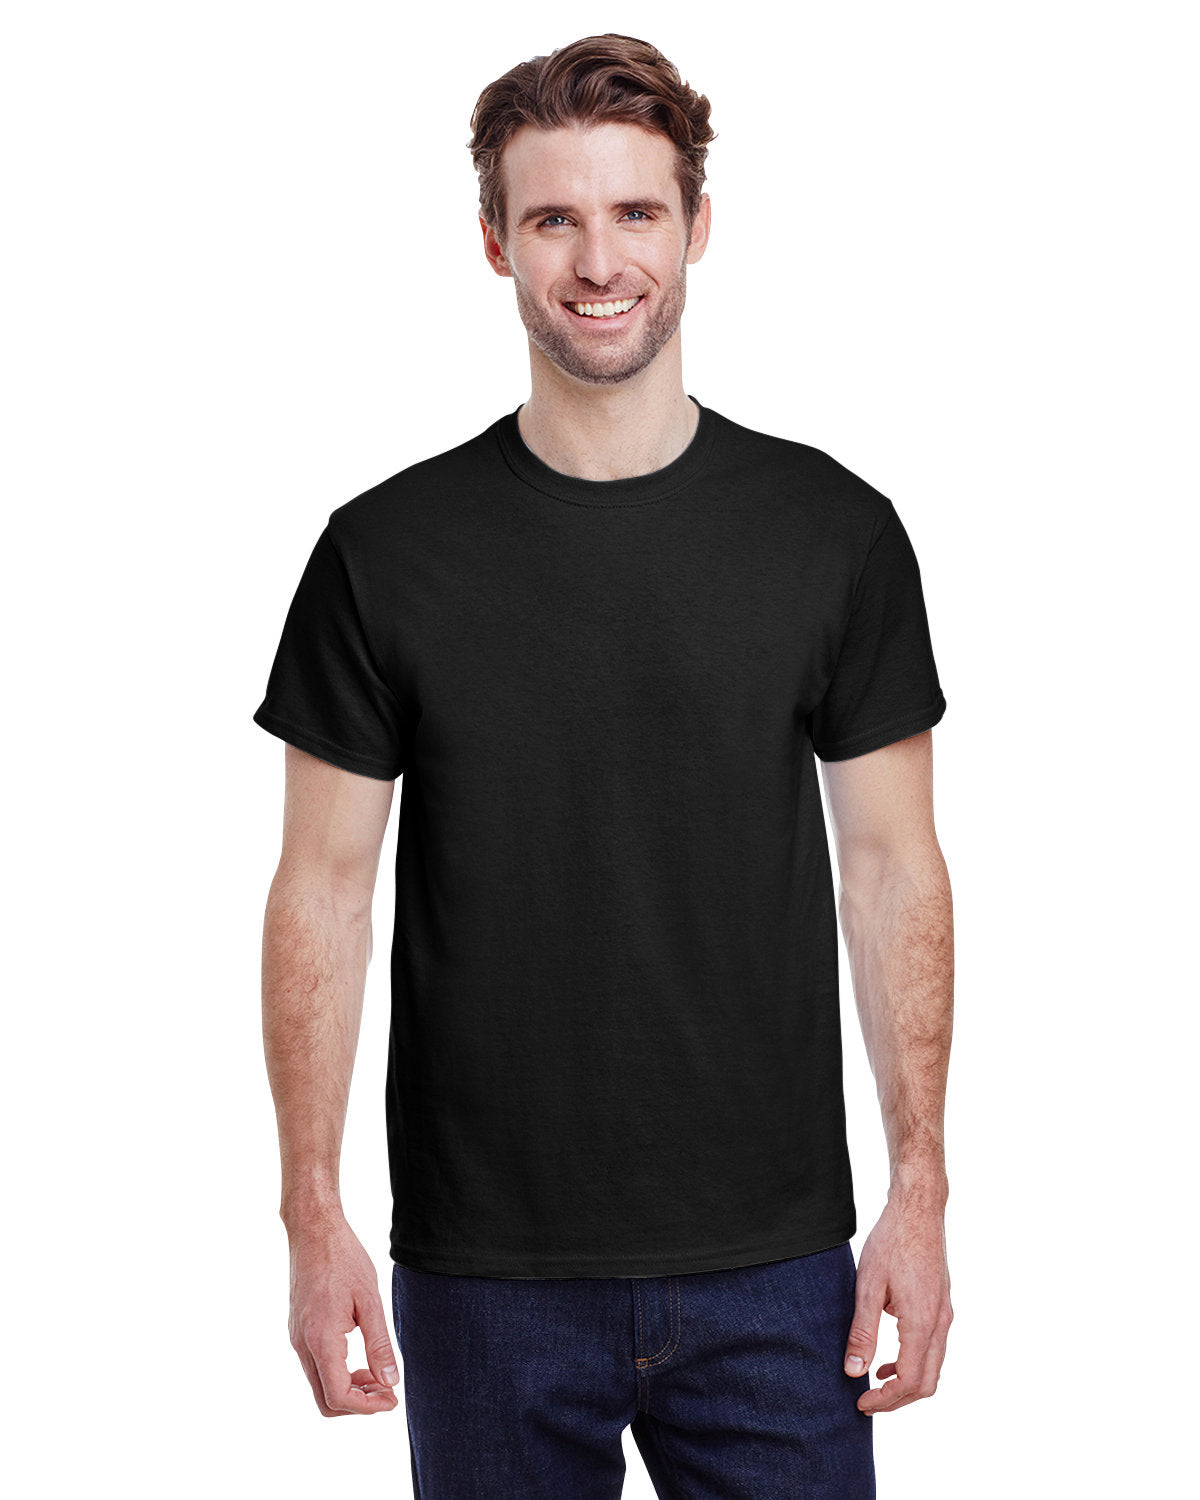 Short sleeve cotton tee shirt w/ GCC logo